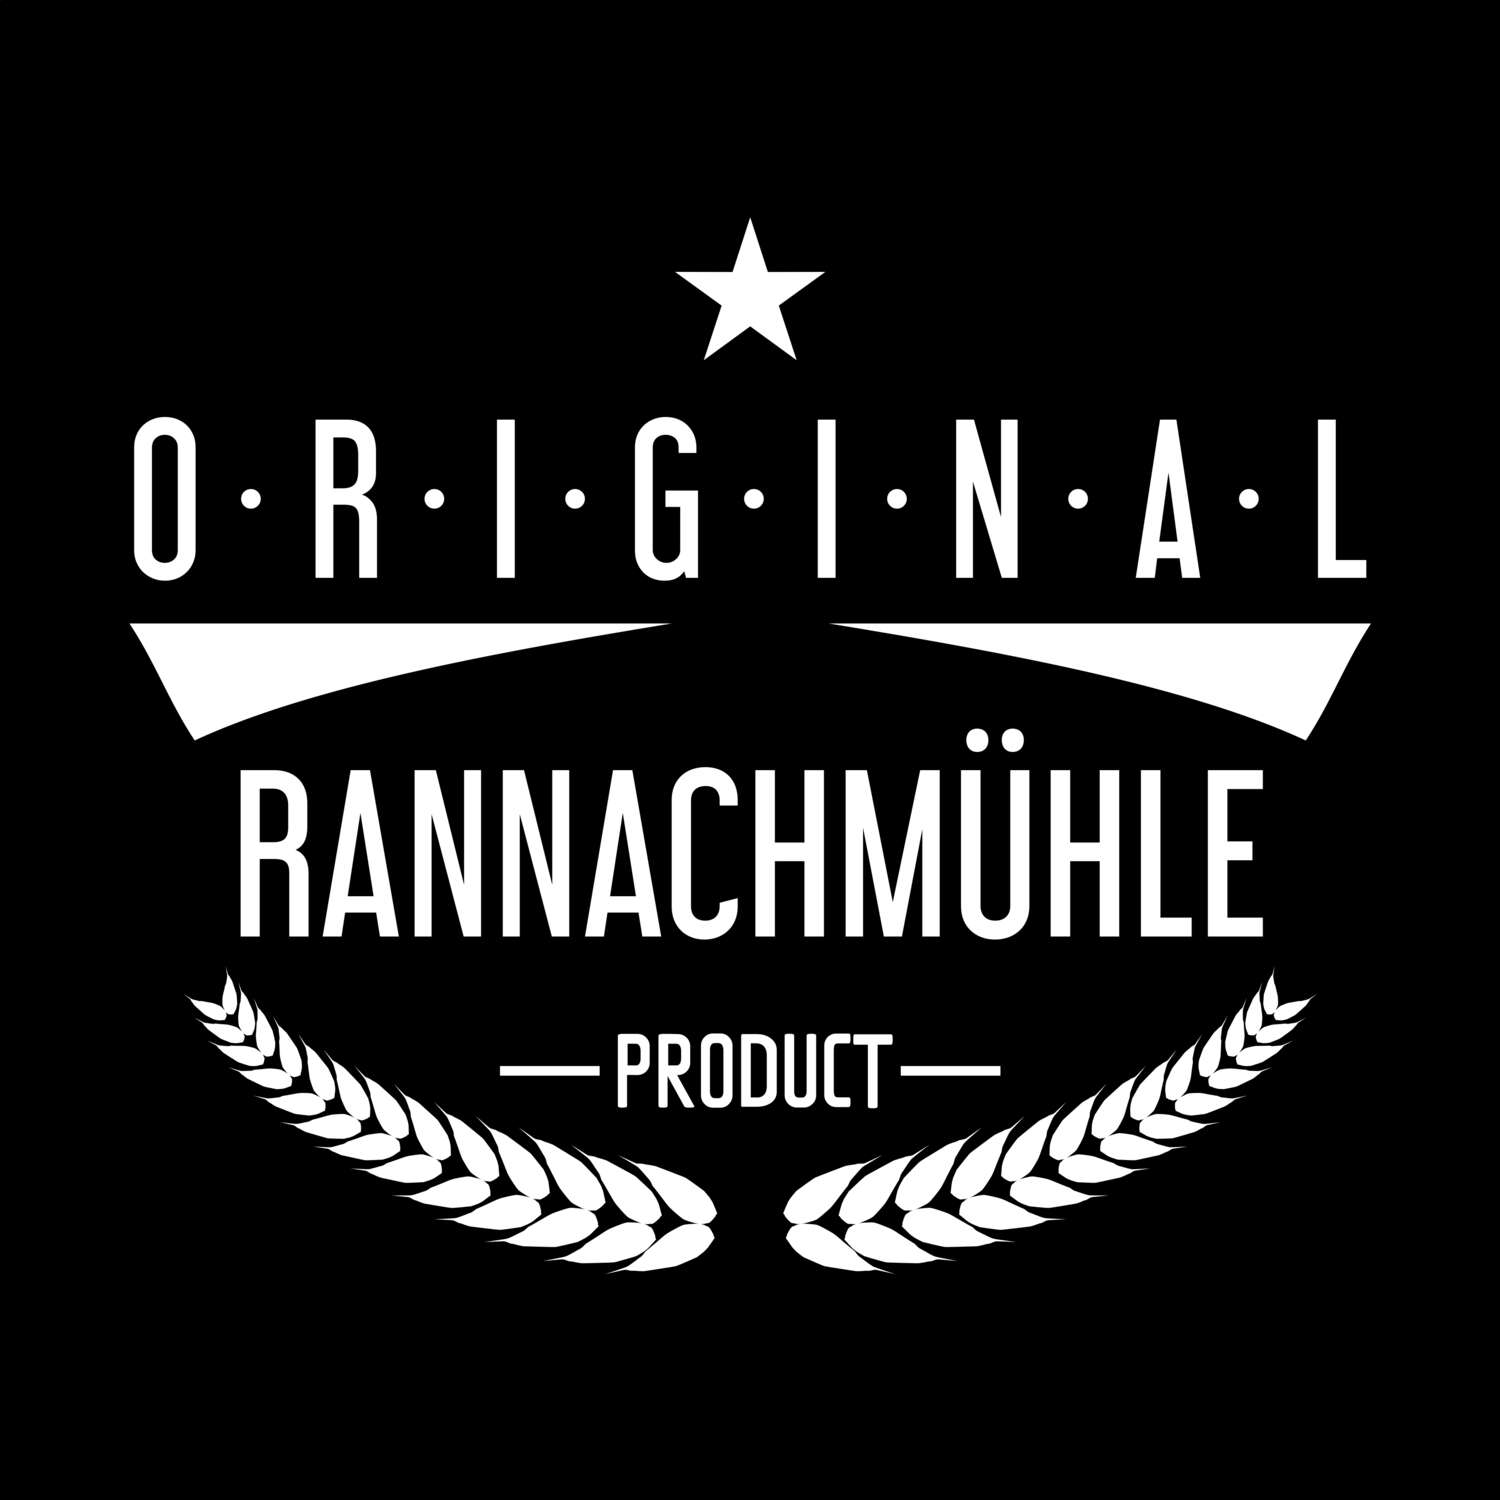 Rannachmühle T-Shirt »Original Product«